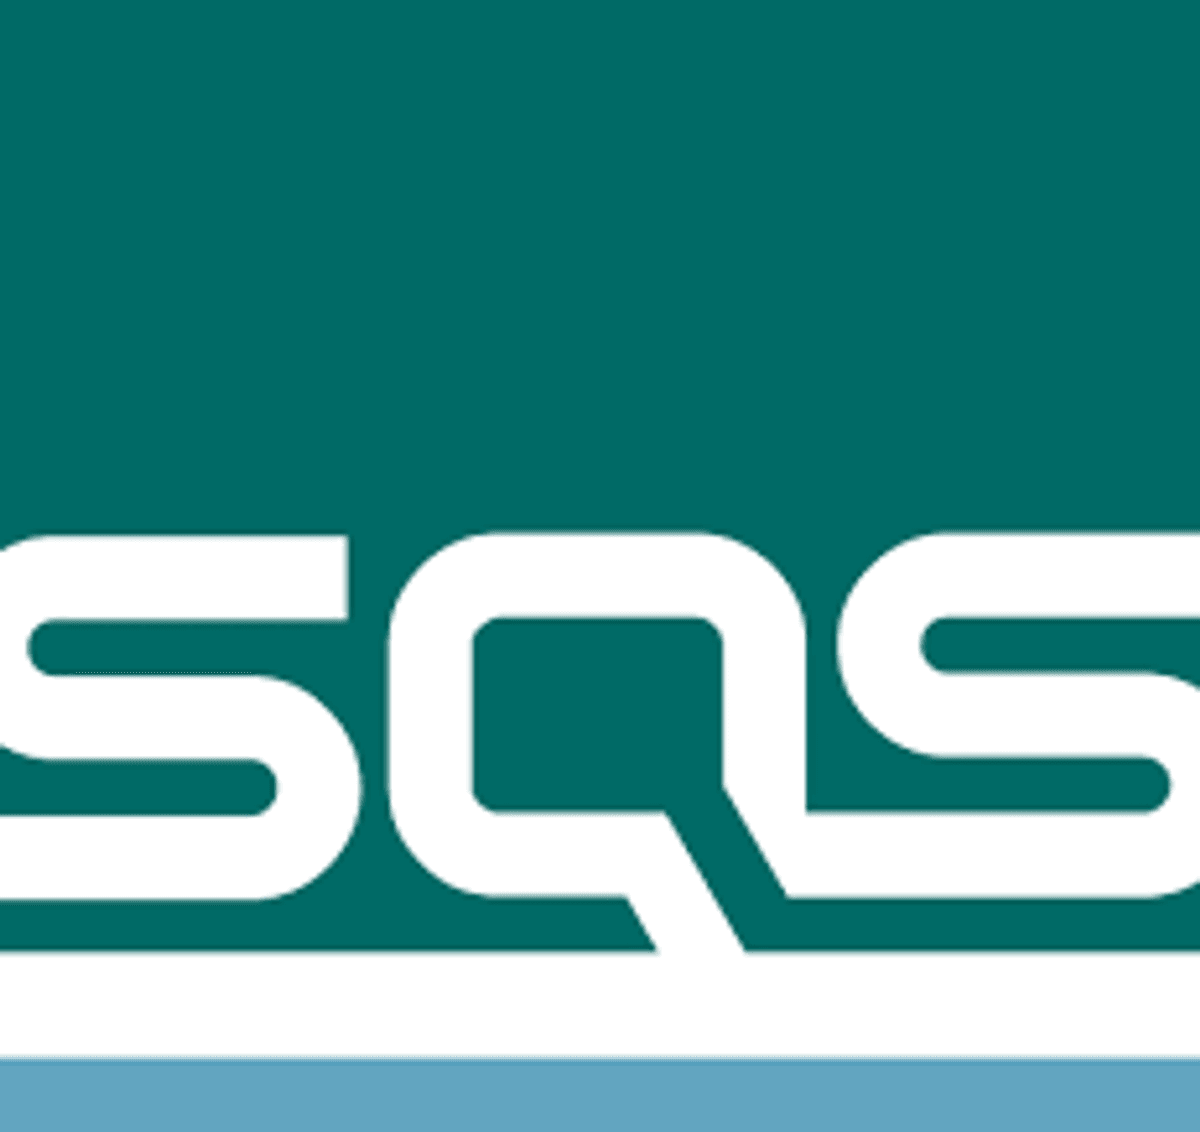 SQS en Siemens werken samen rond IoT-platform MindSphere image